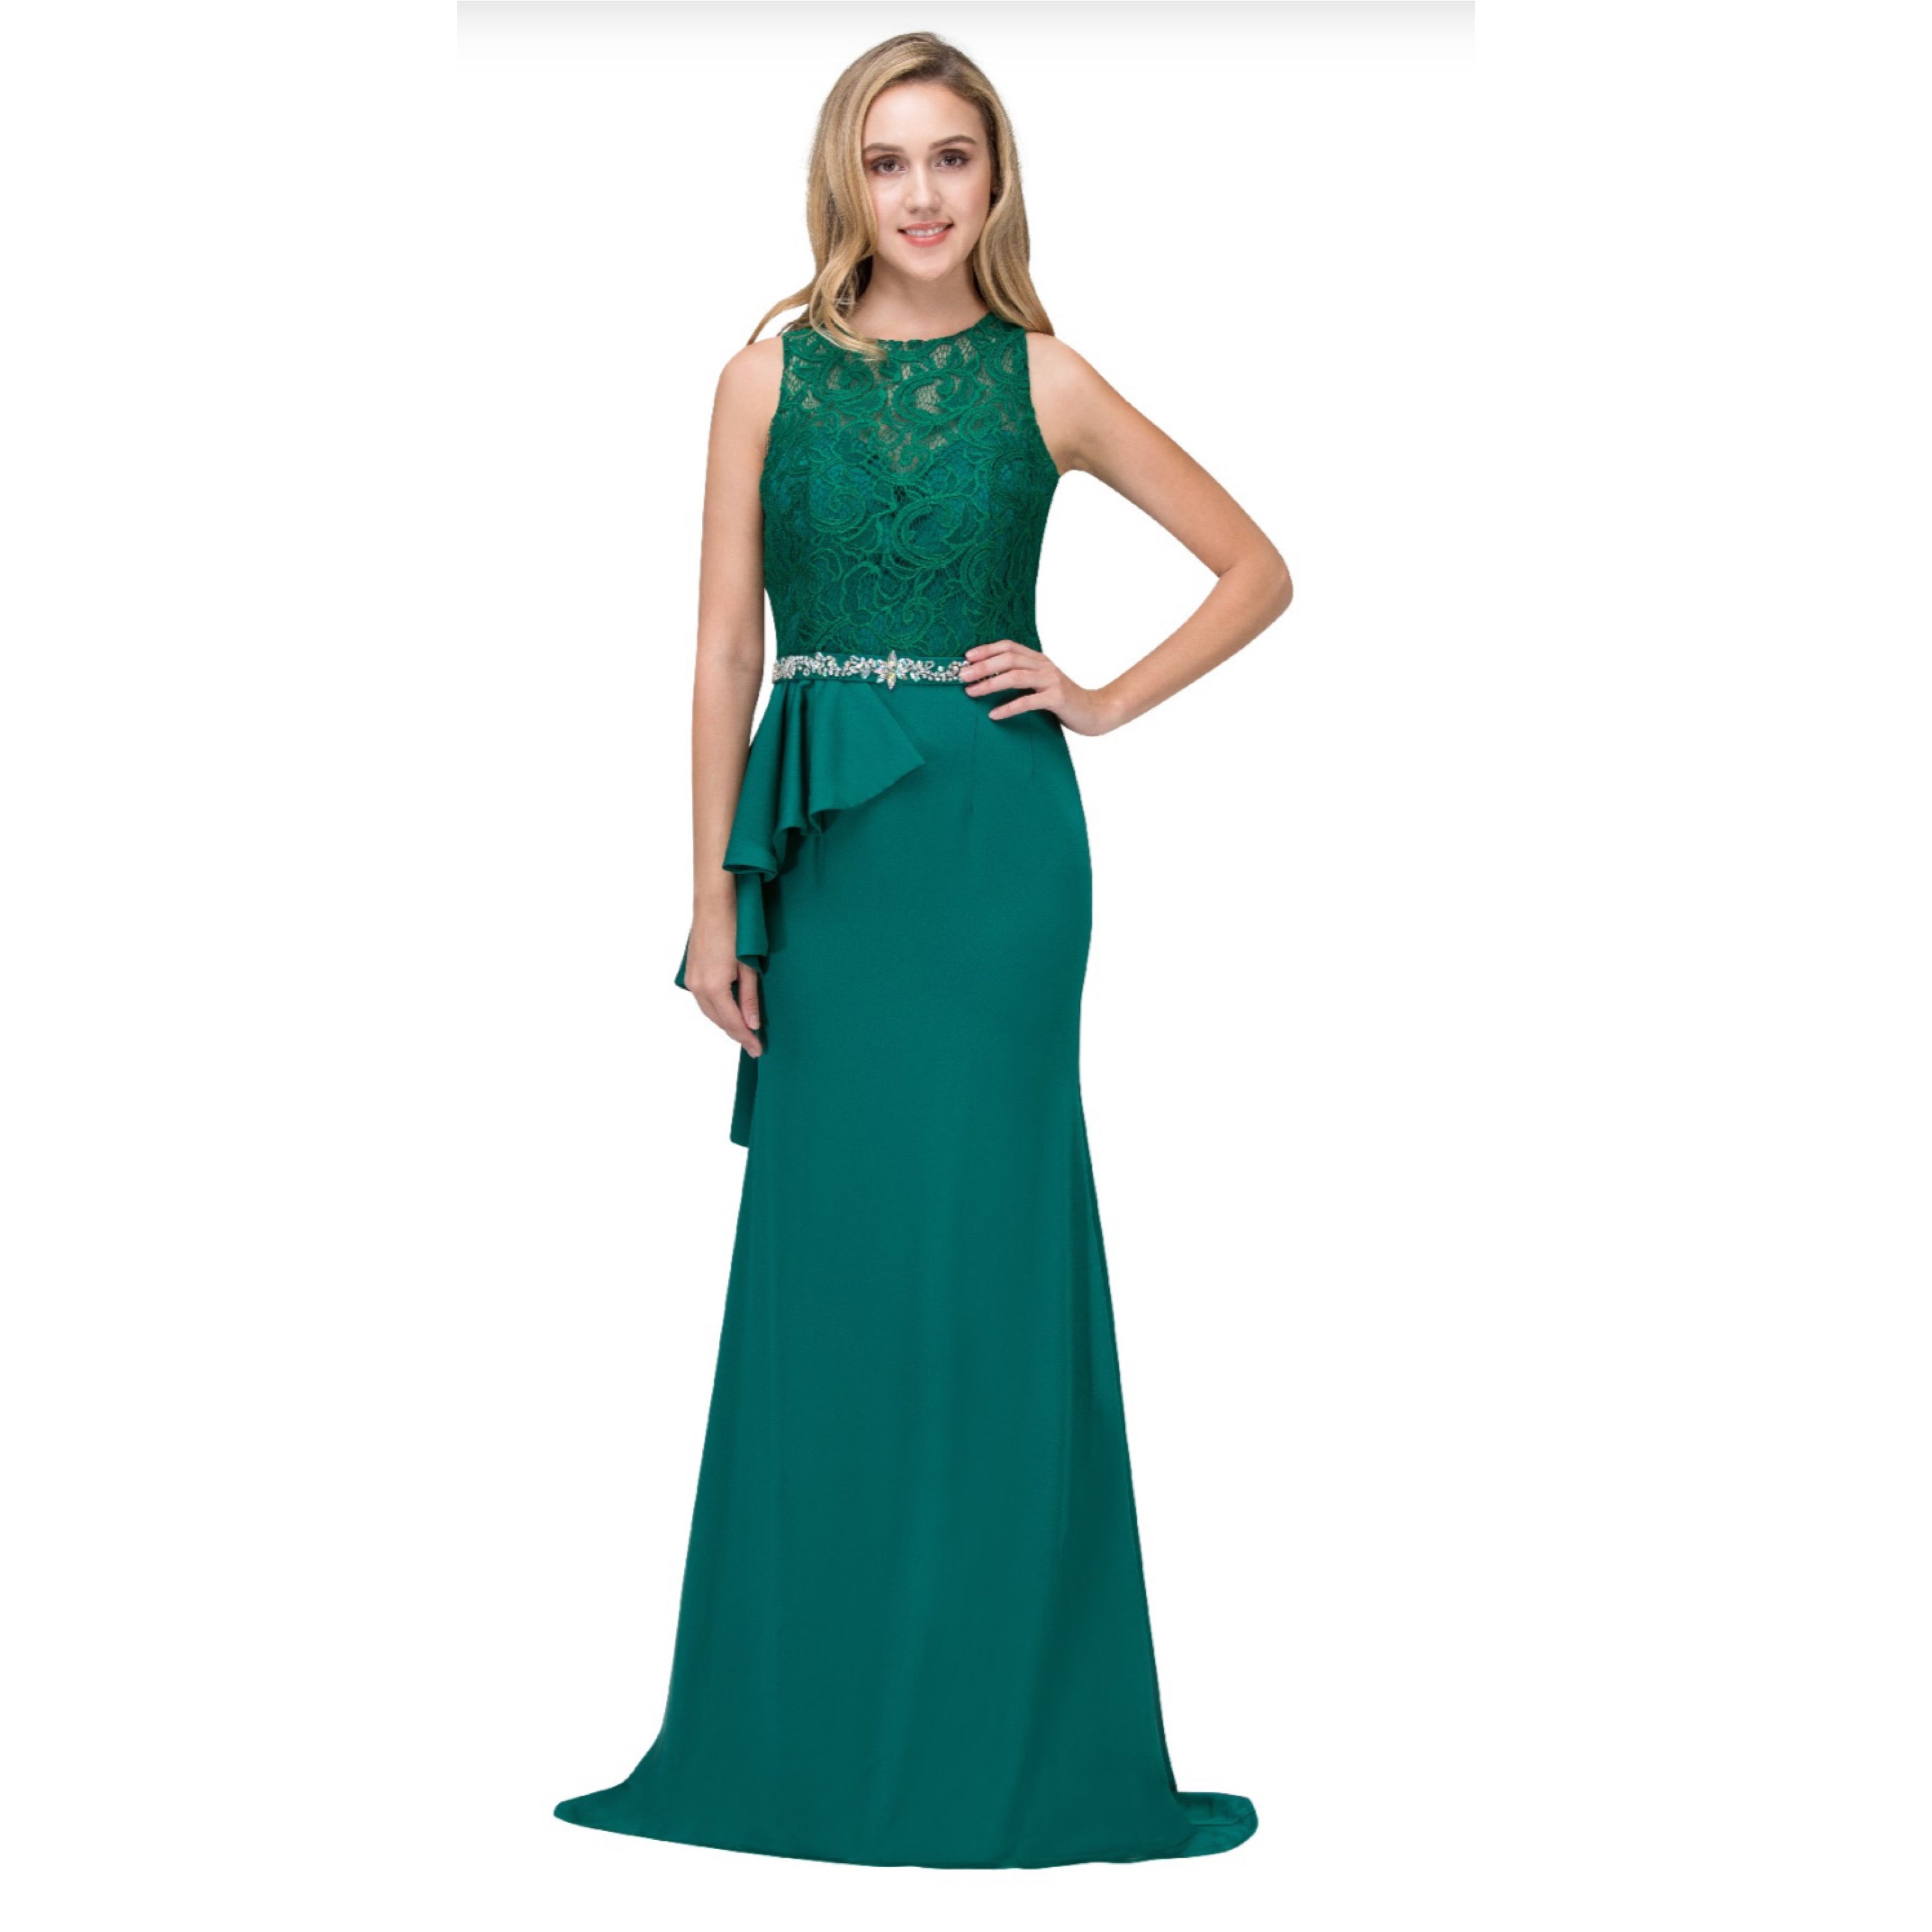 Star Box evergreen dress, size M